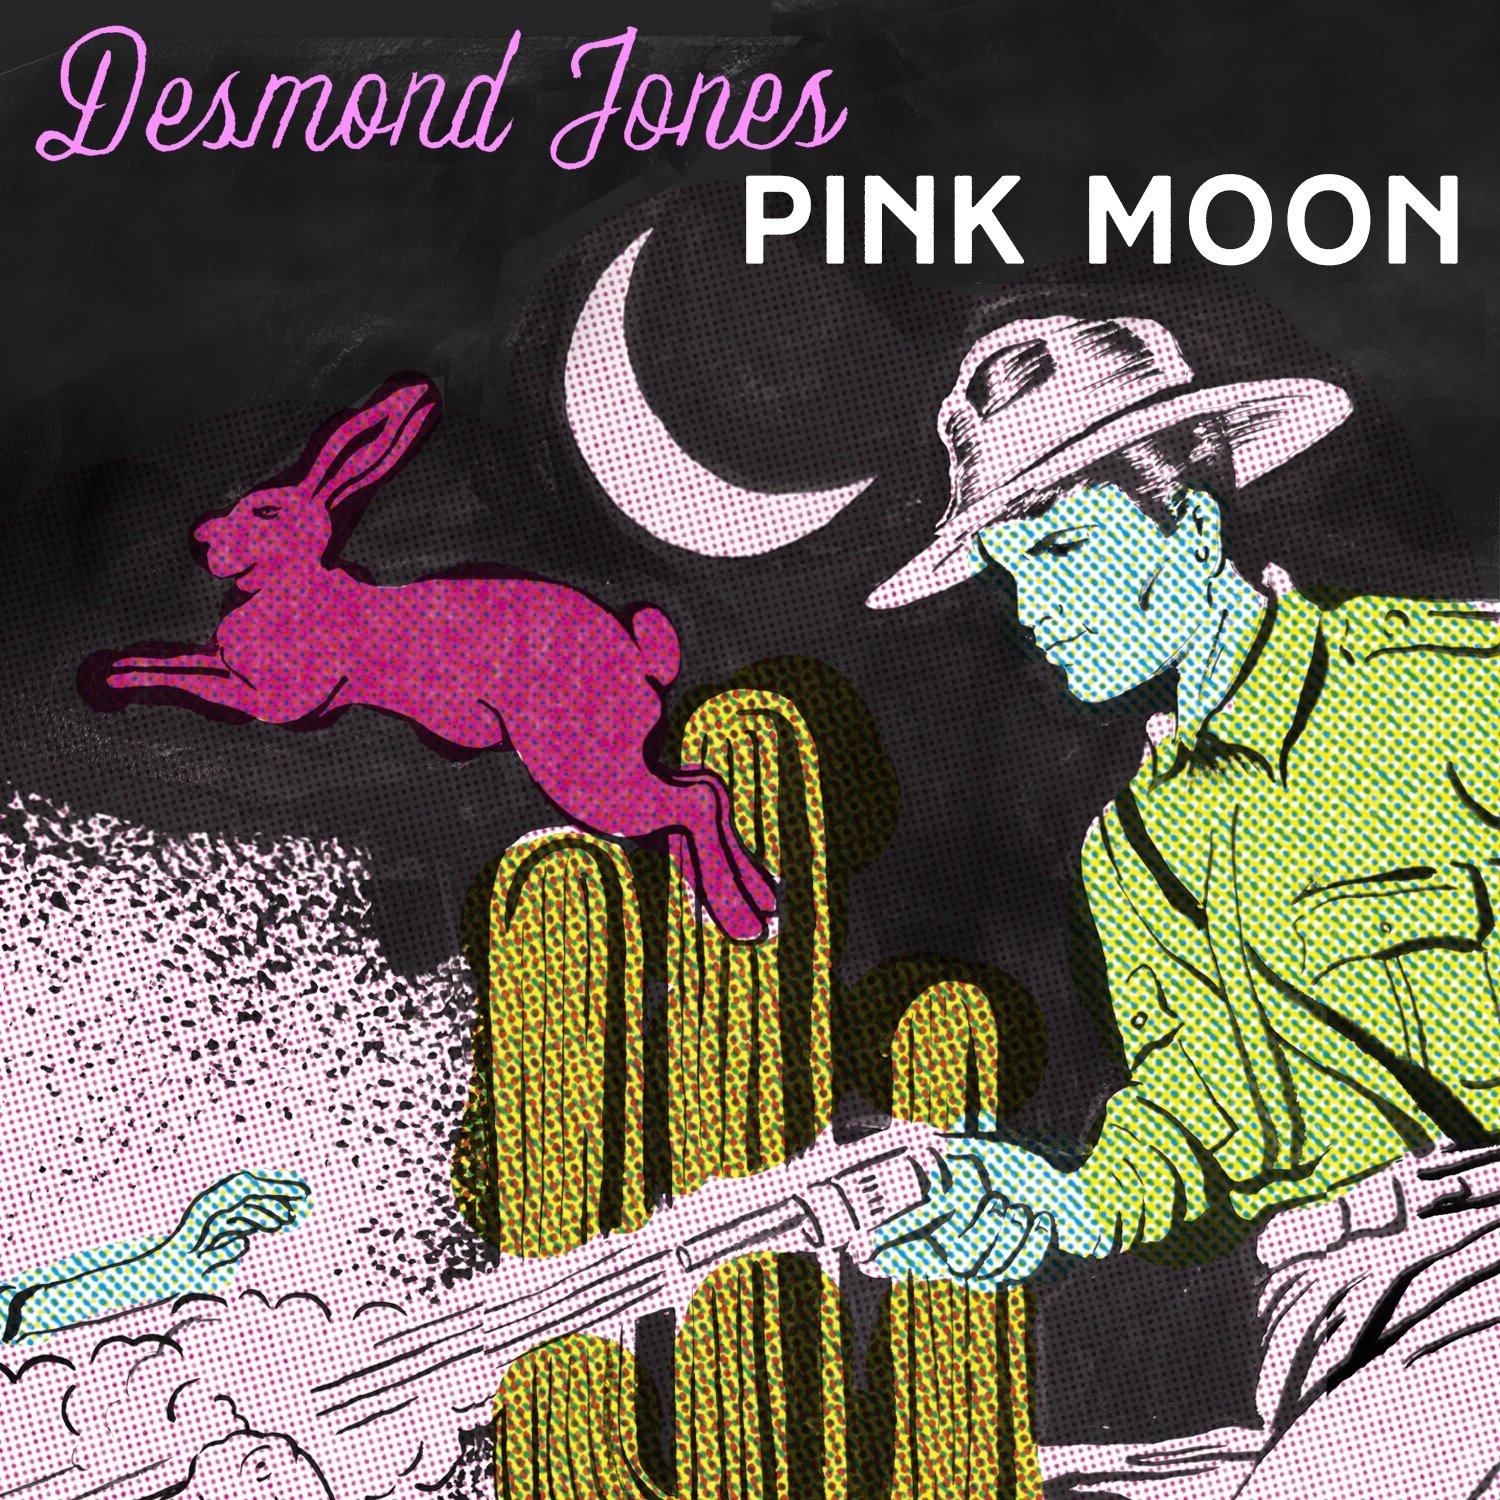 pink moon (1)